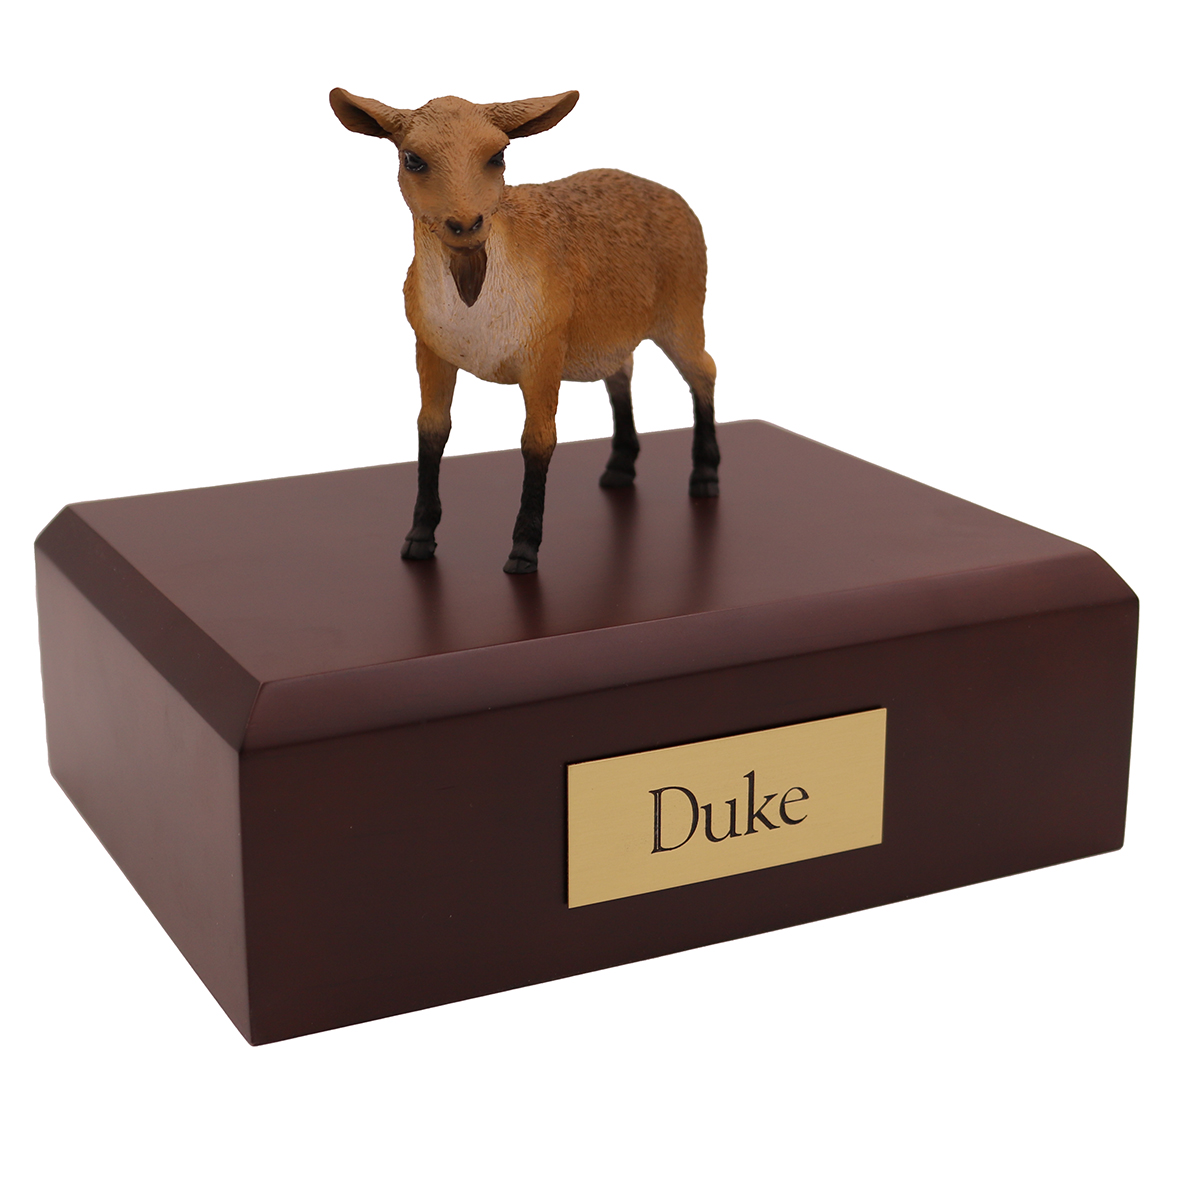 Goat Brown - Figurine Urn